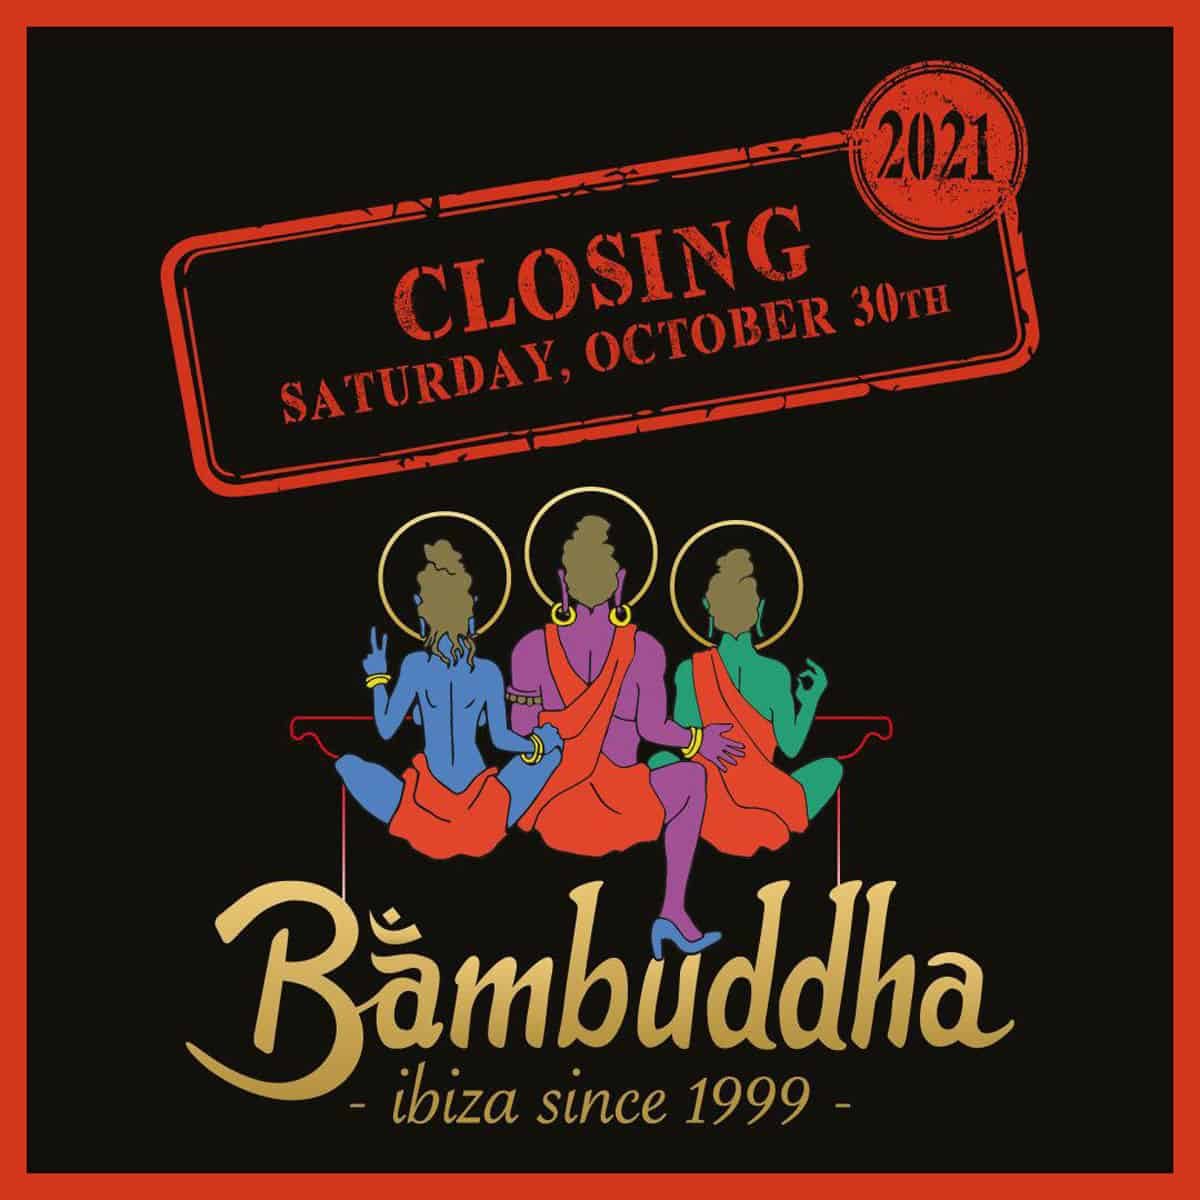 schließen-bambuddha-ibiza-2021-welcometoibiza